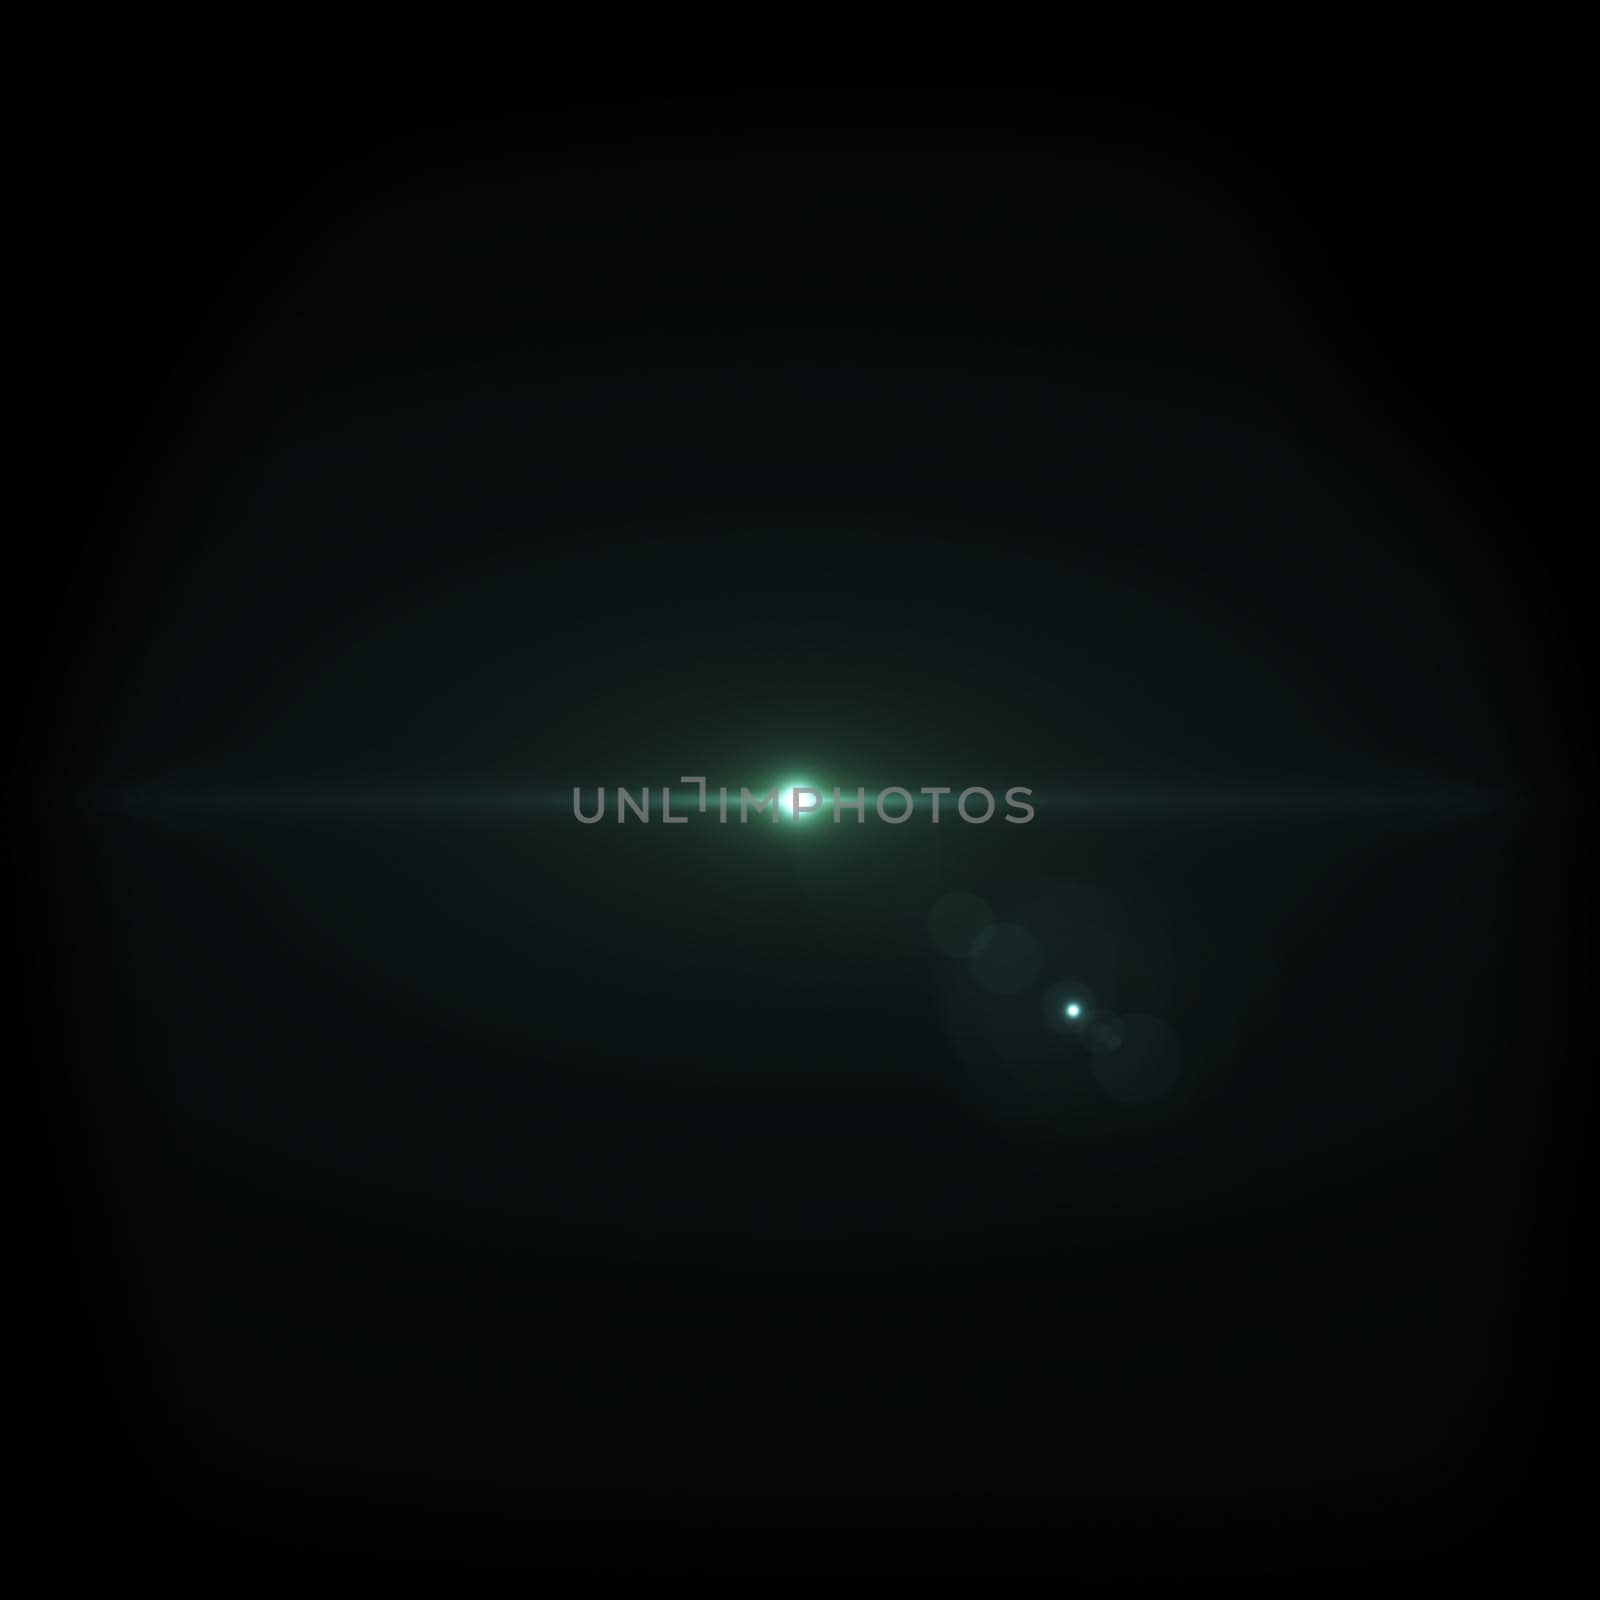 Green Light Lens flare on black background. by JpRamos